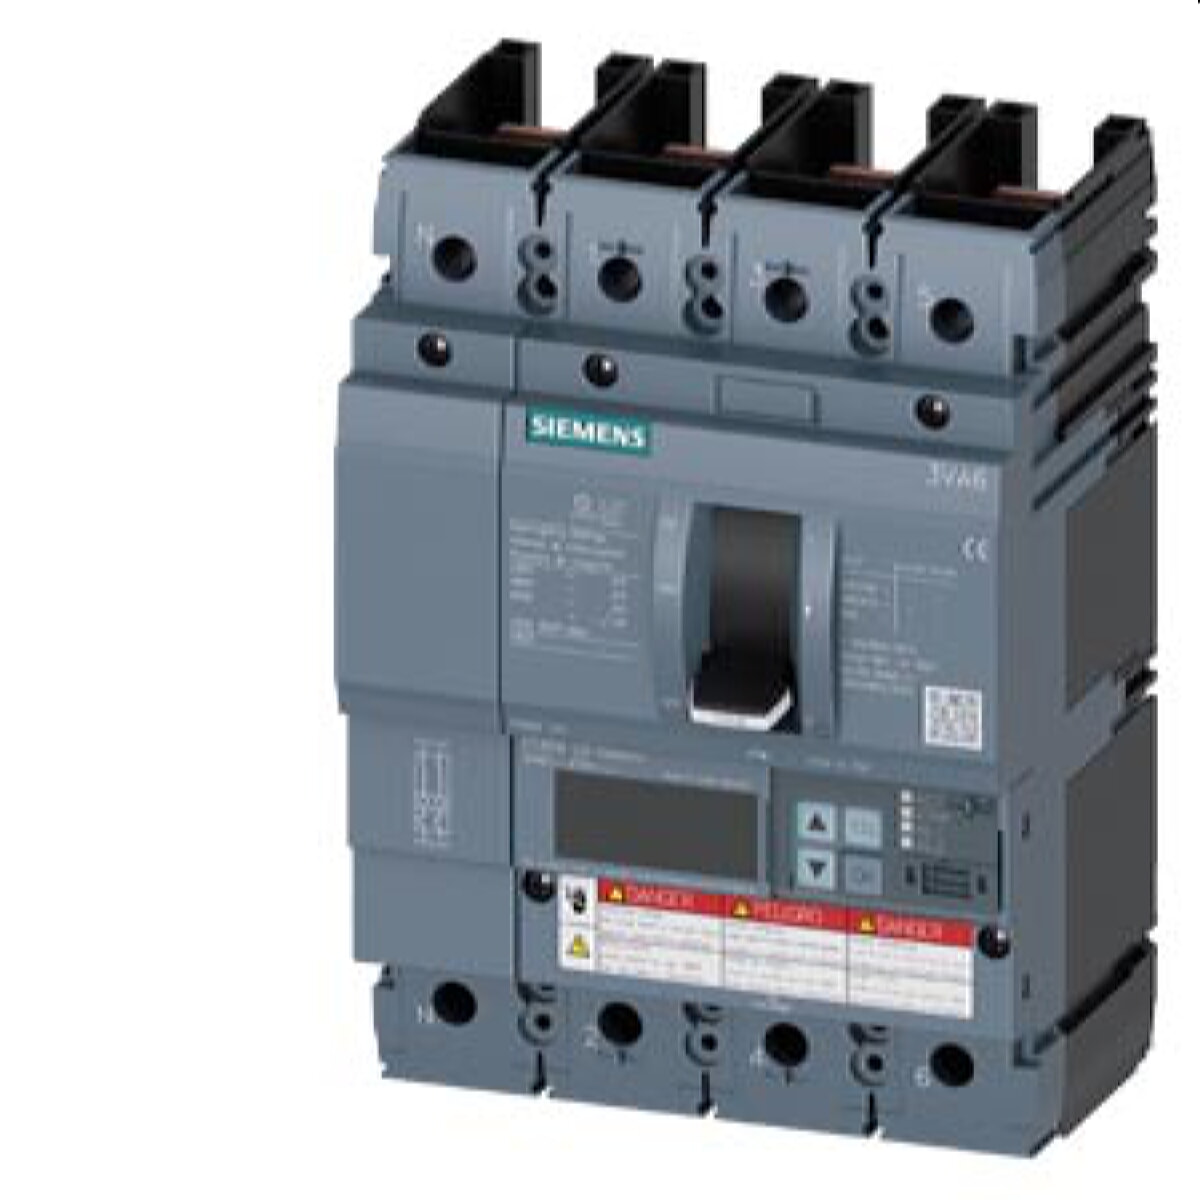 Siemens Leistungsschalter 3VA6 65kA 480V LSI 150A 3VA6115-6KT41-0AA0